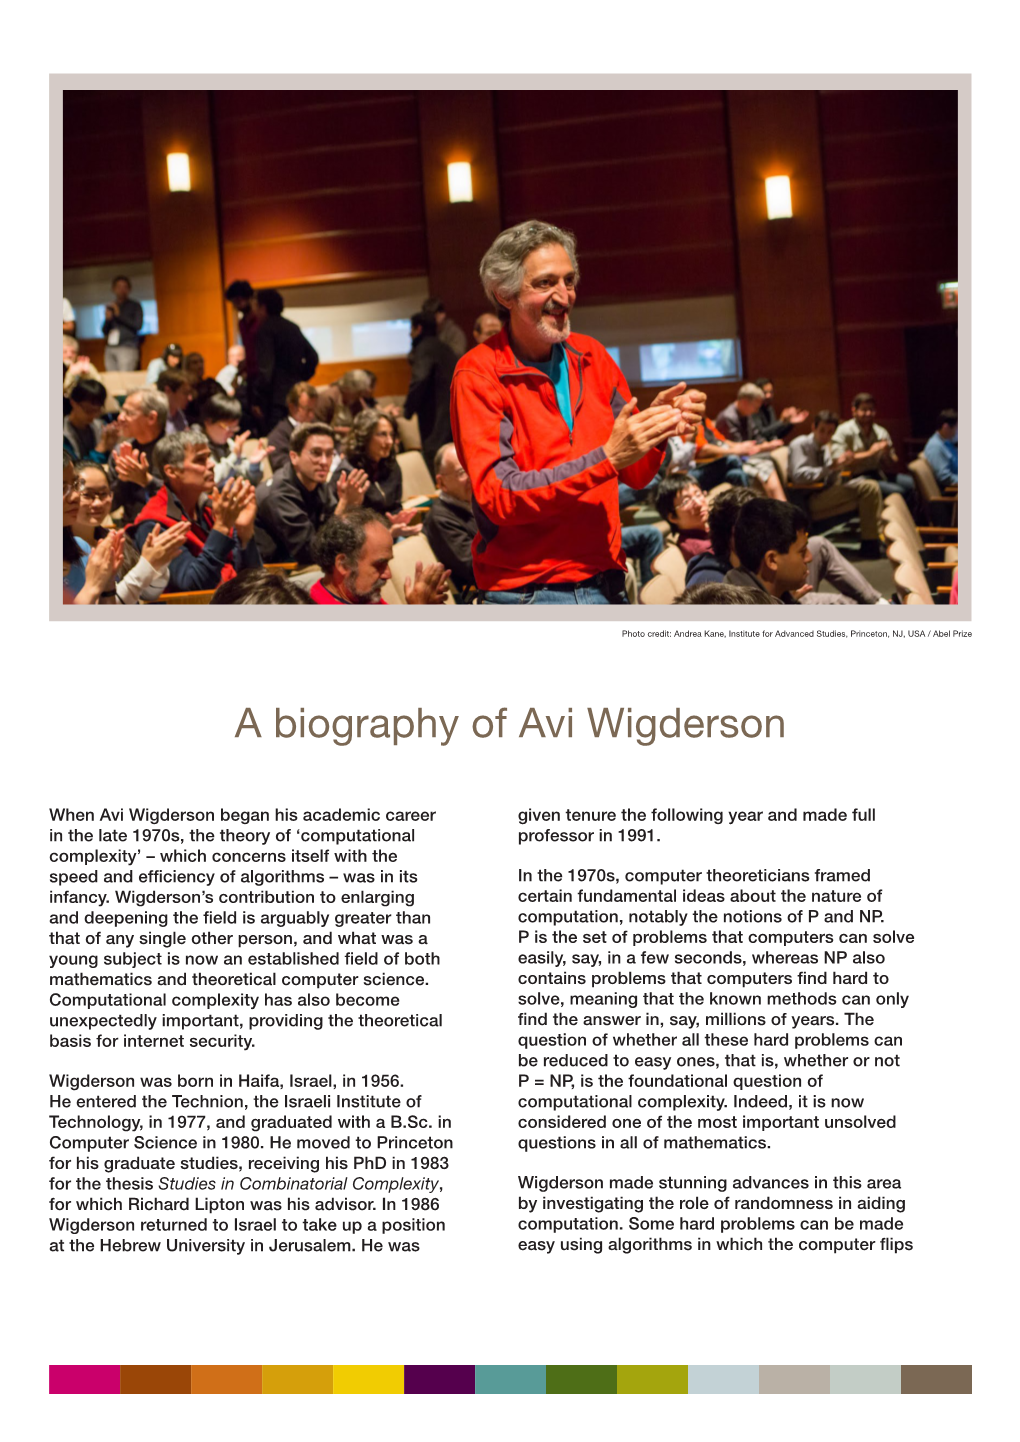 A Biography of Avi Wigderson